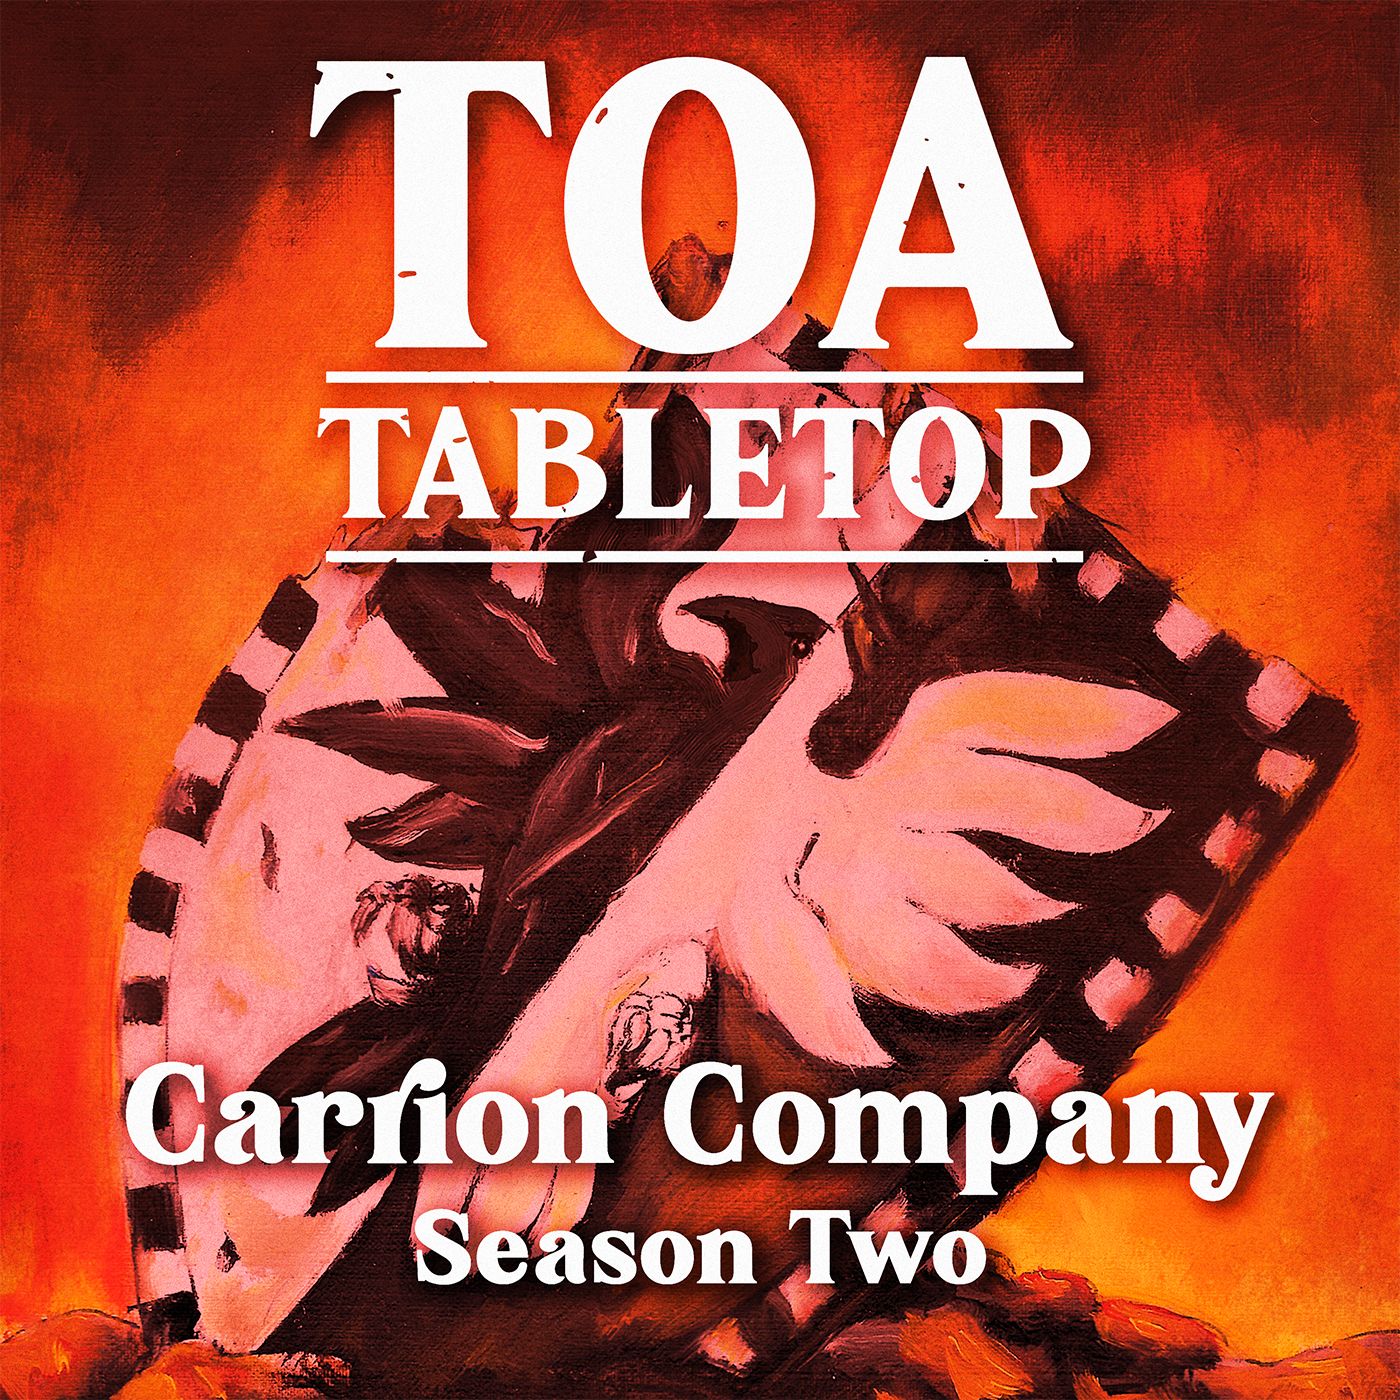 Carrion Company Season 2 - Episode 0